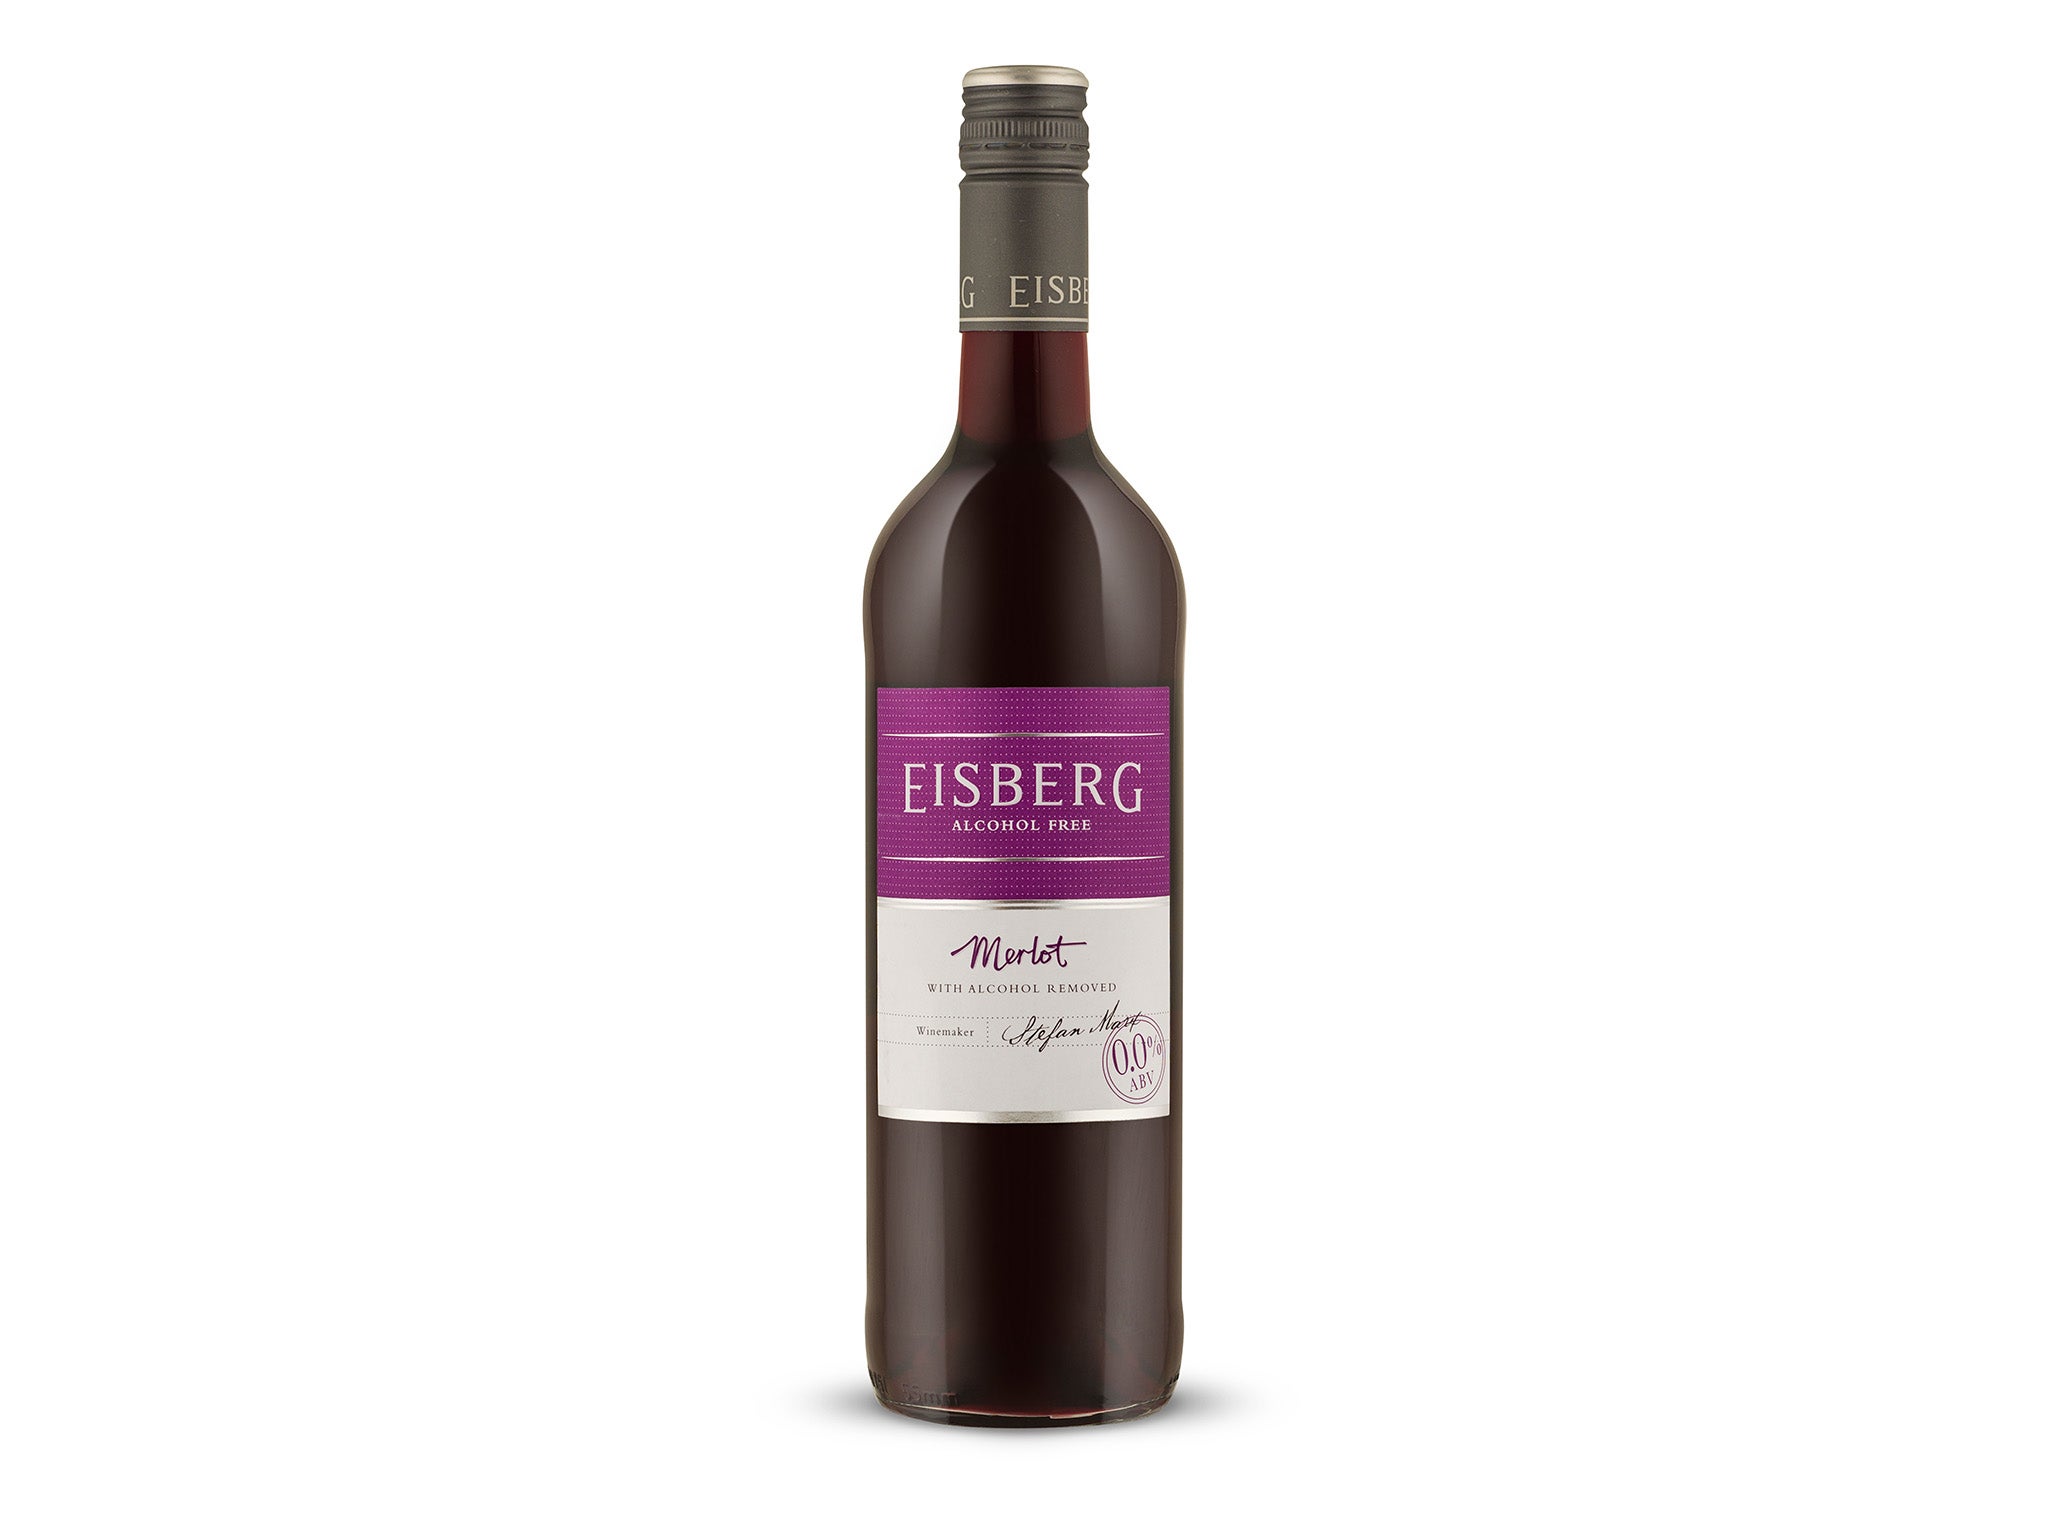 Eisberg Merlot alcohol free wine